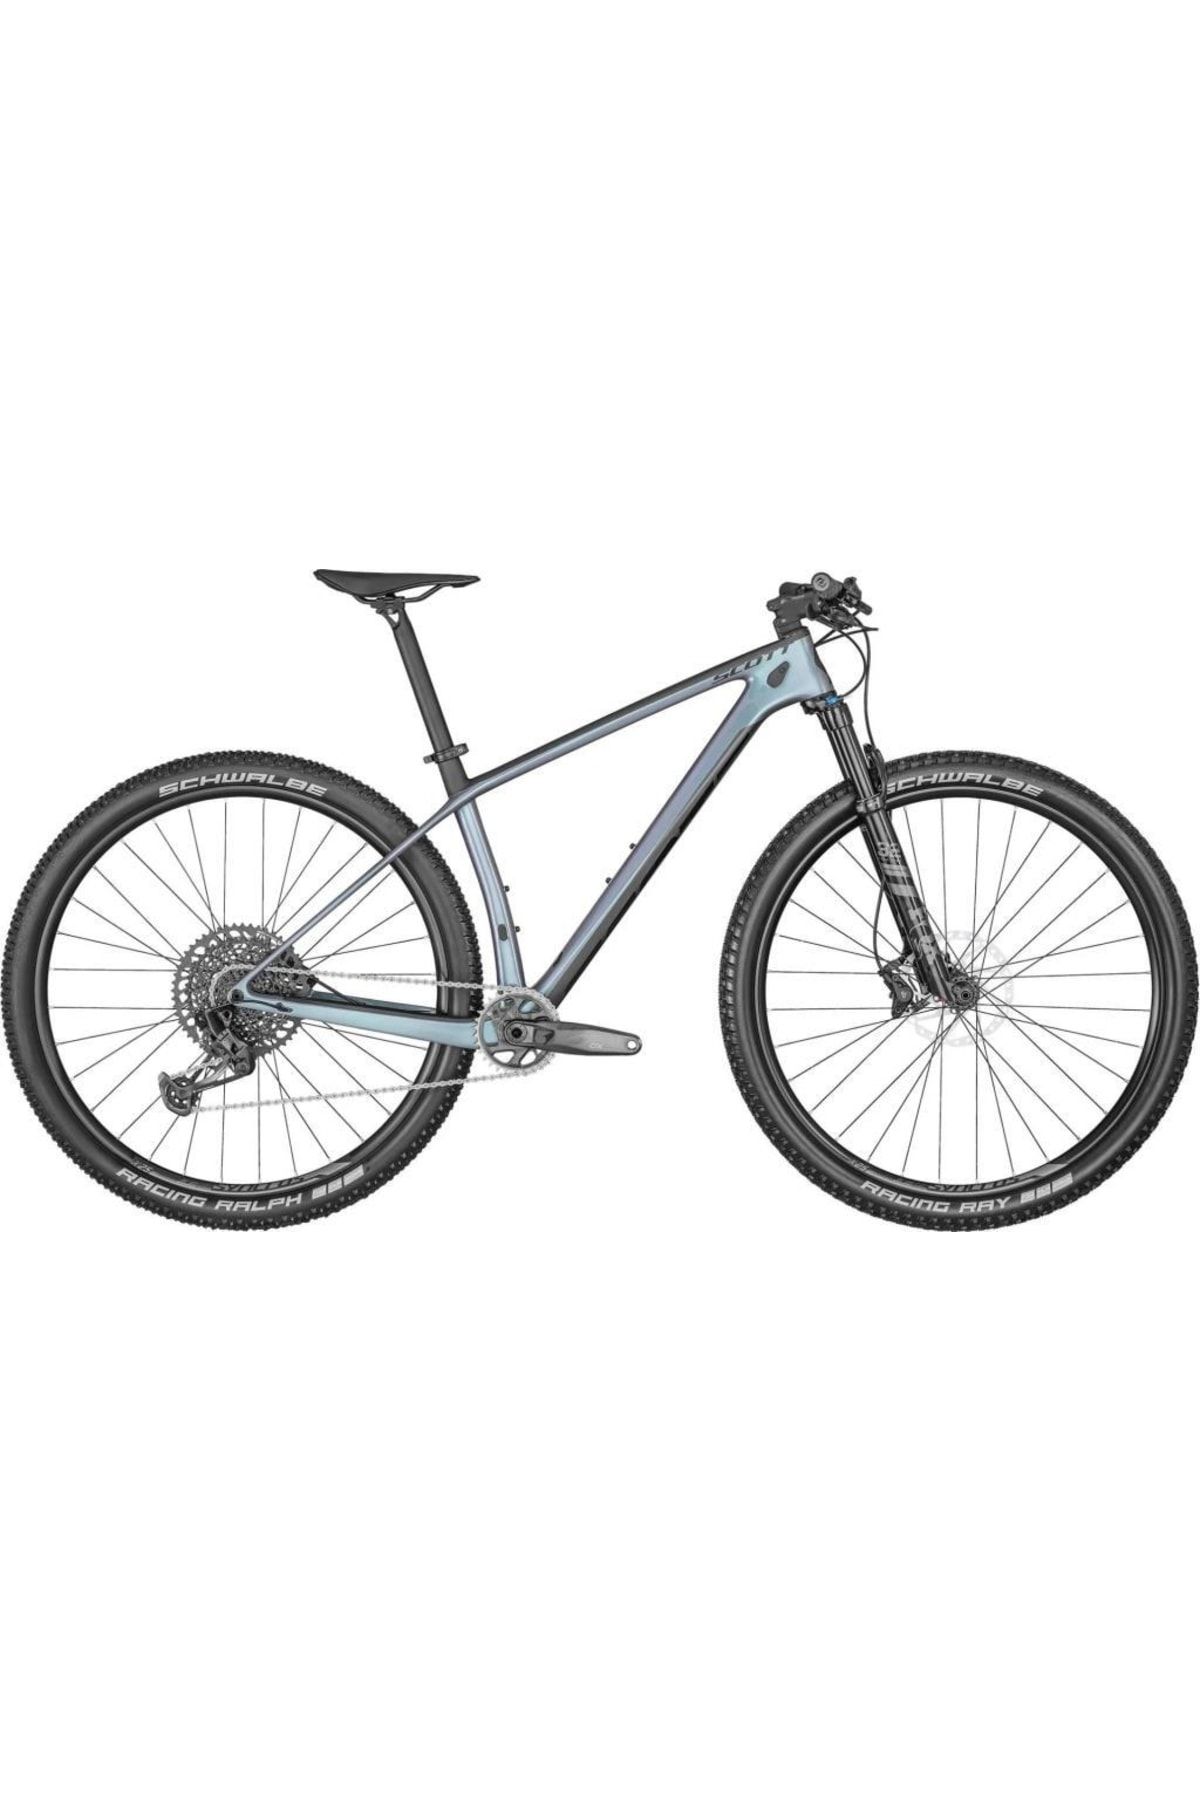 SCOTT Scale 920 Karbon 29 Jant Dağ Bisikleti 2022 Model